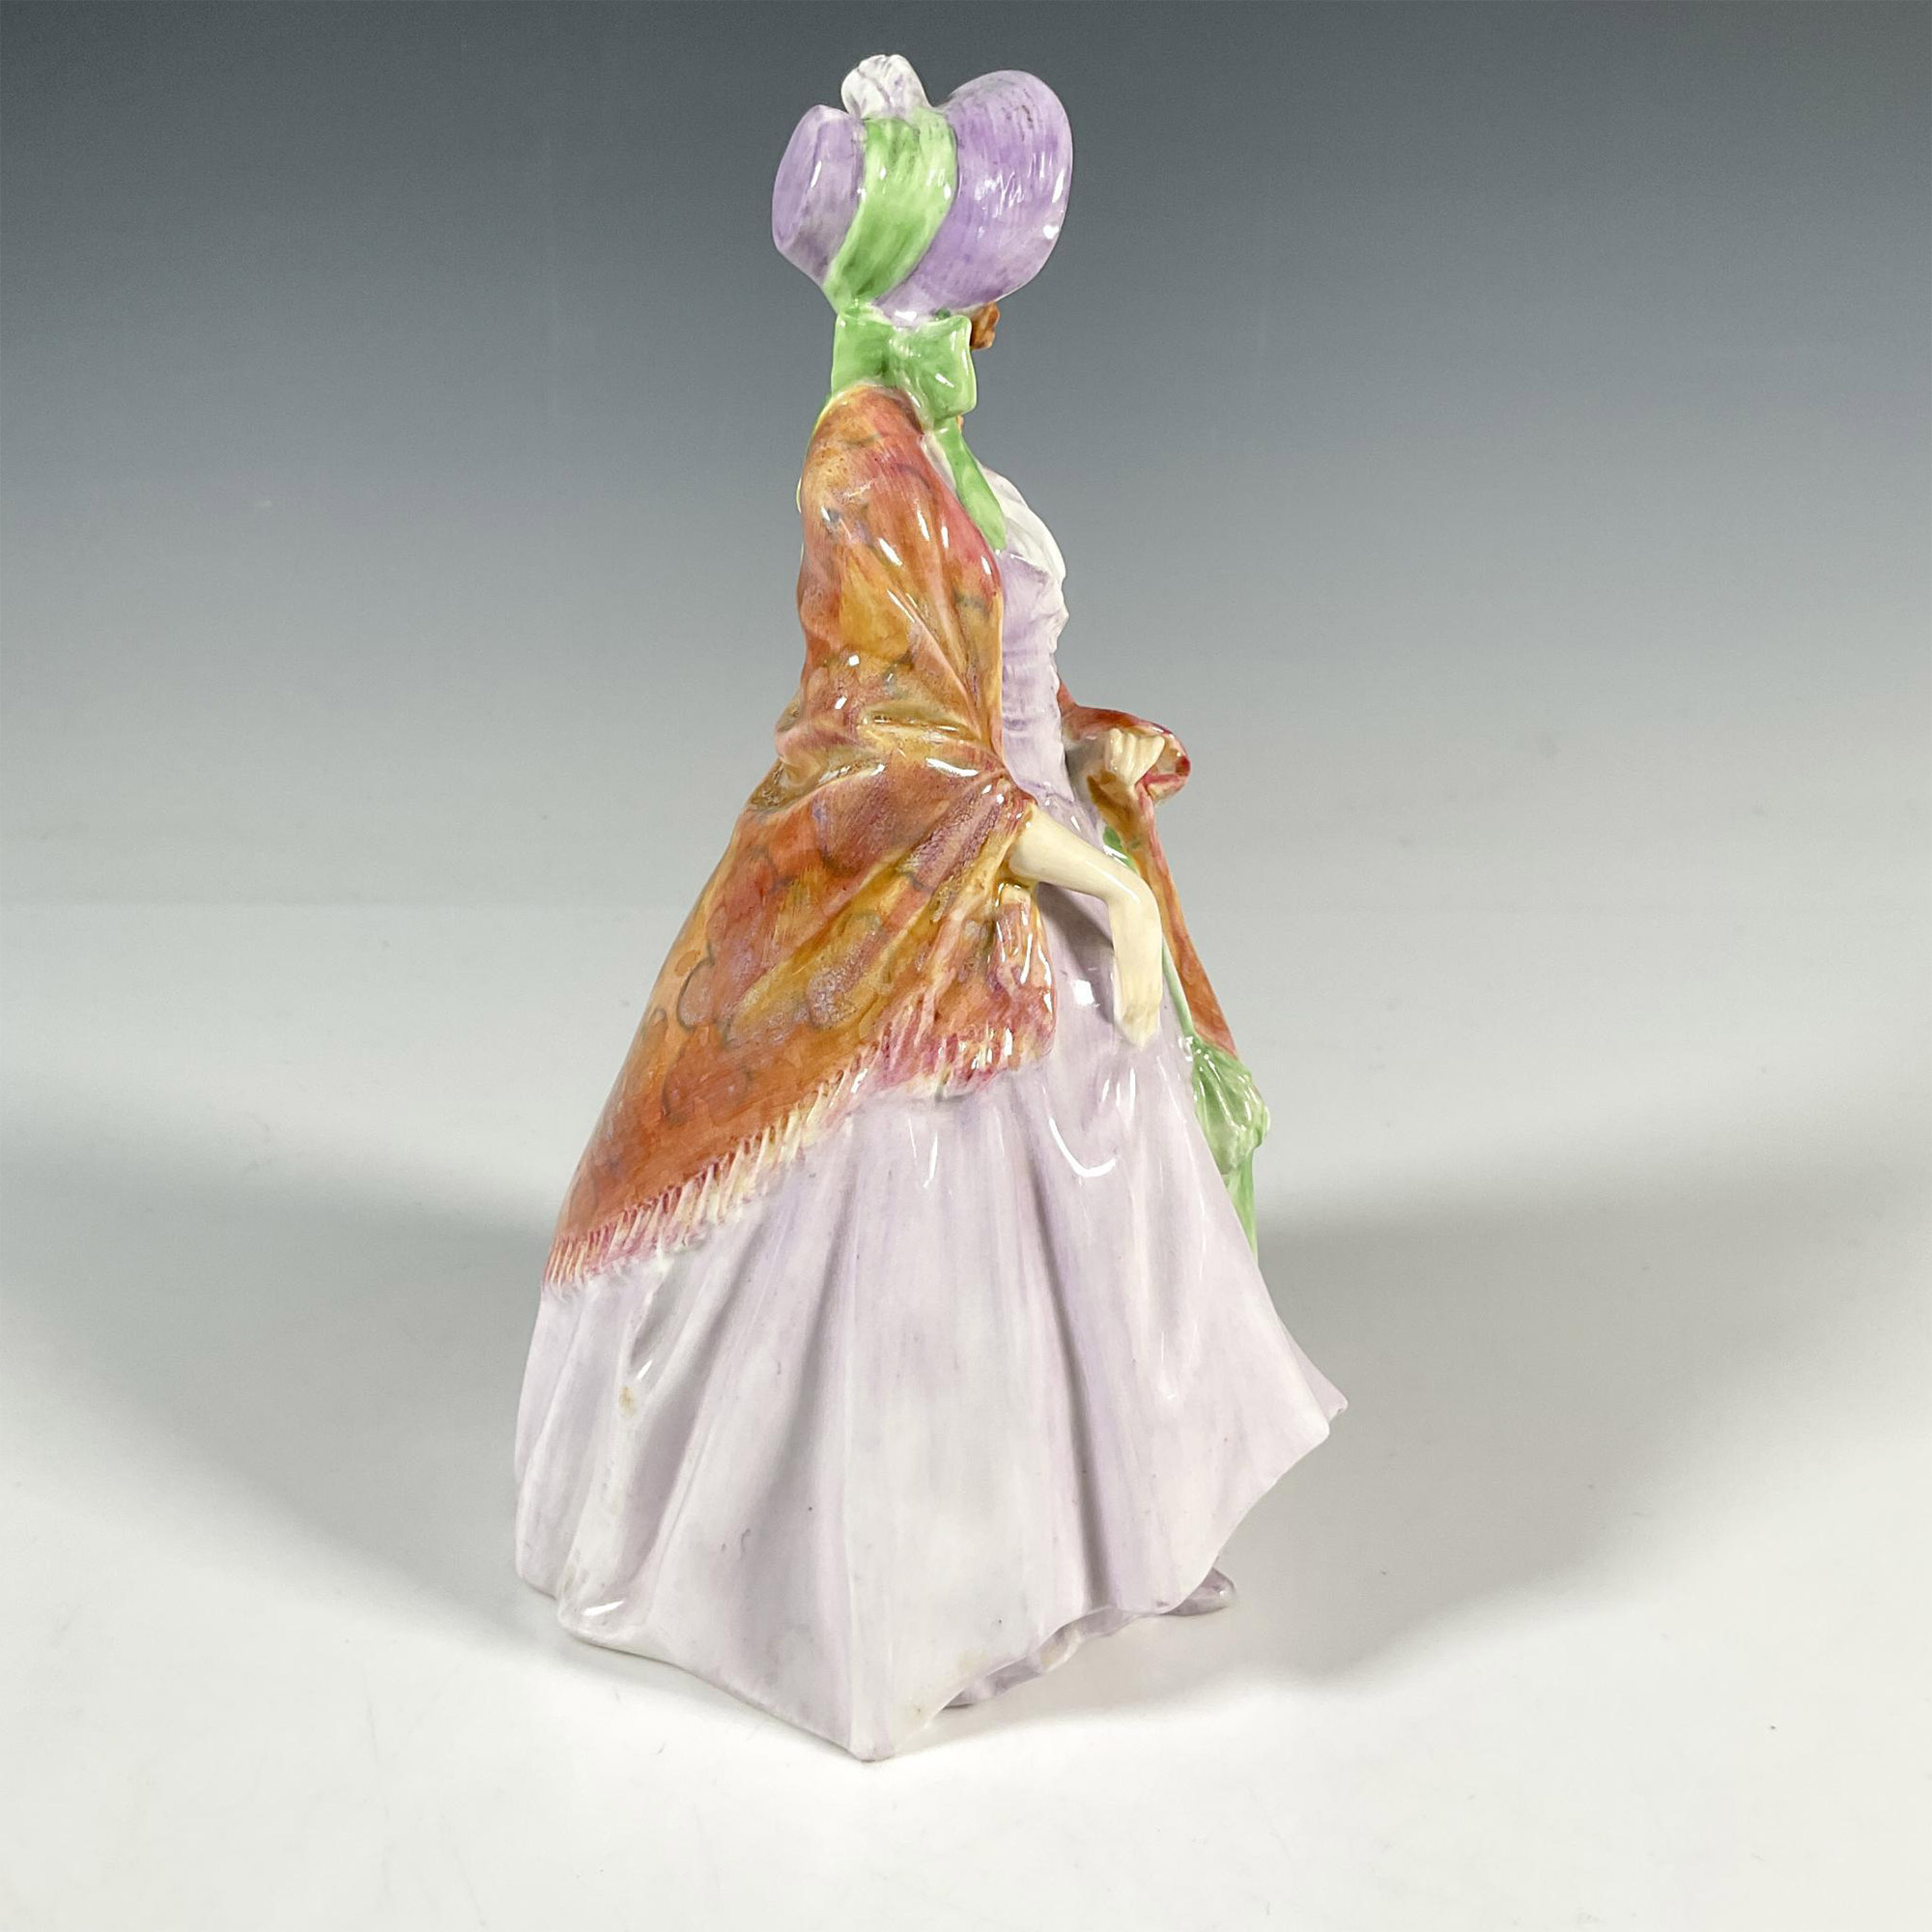 Paisley Shawl HN1392 - Royal Doulton Figurine Colorway - Image 4 of 5